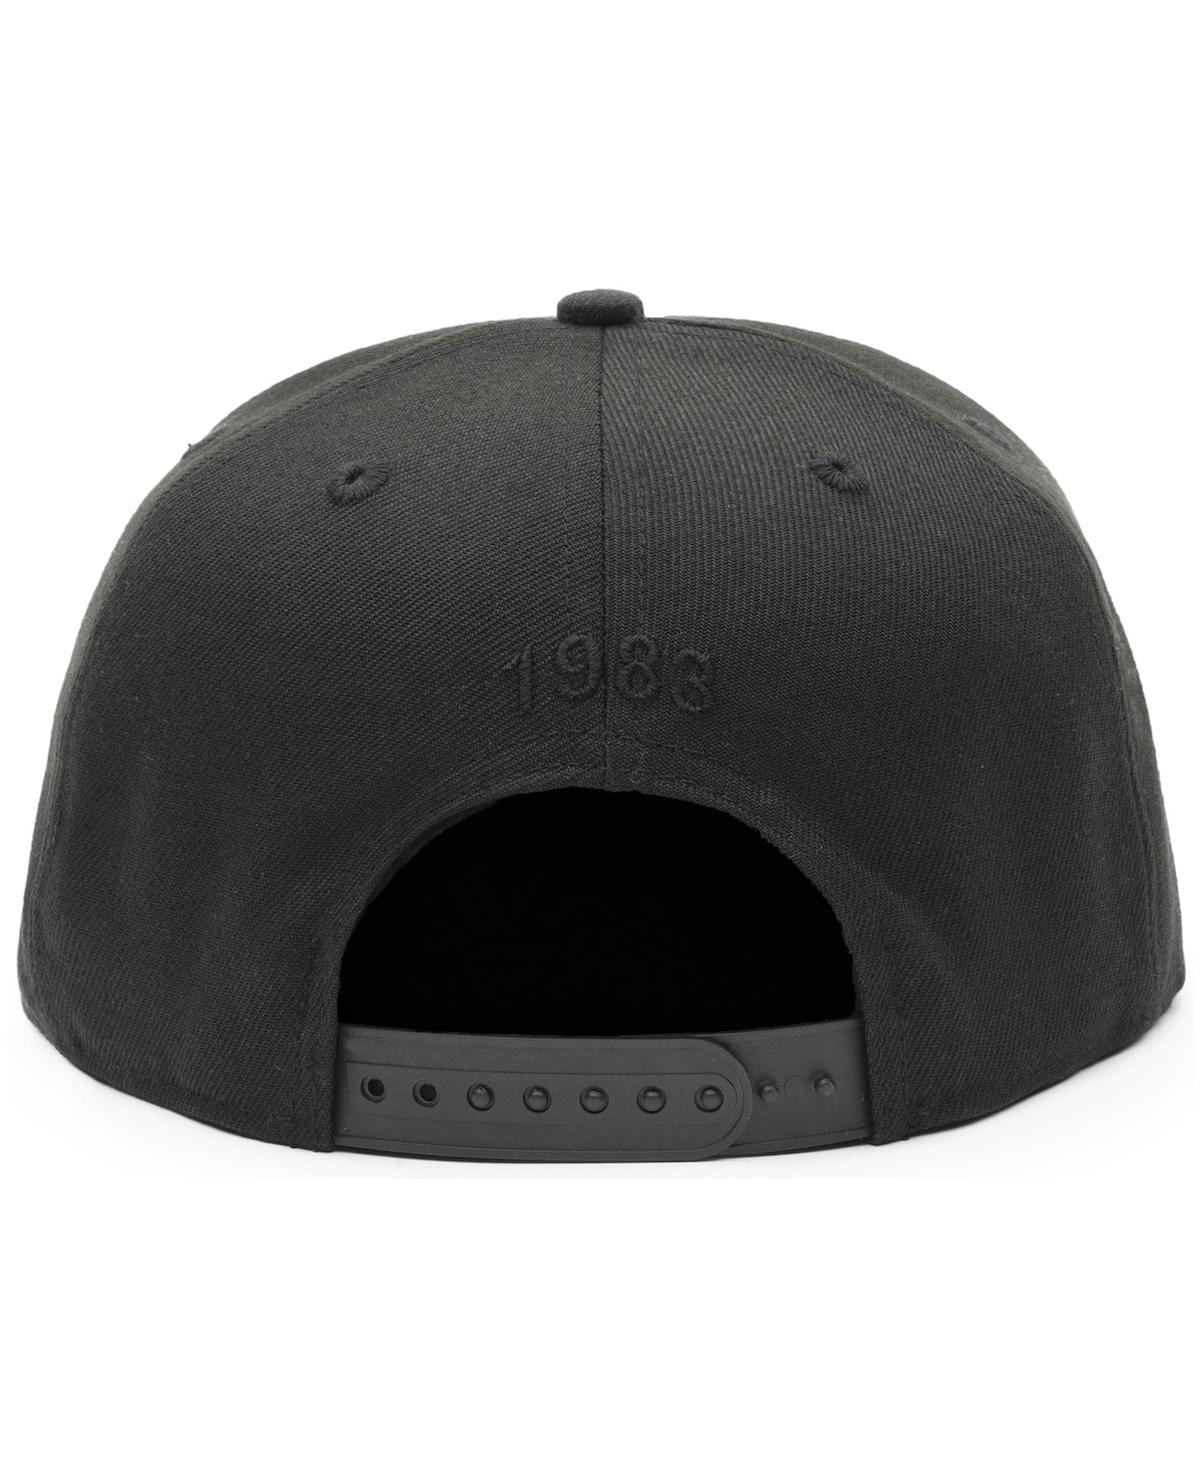 Shop Fi Collection Men's  Black Santos Laguna Dusk Snapback Adjustable Hat